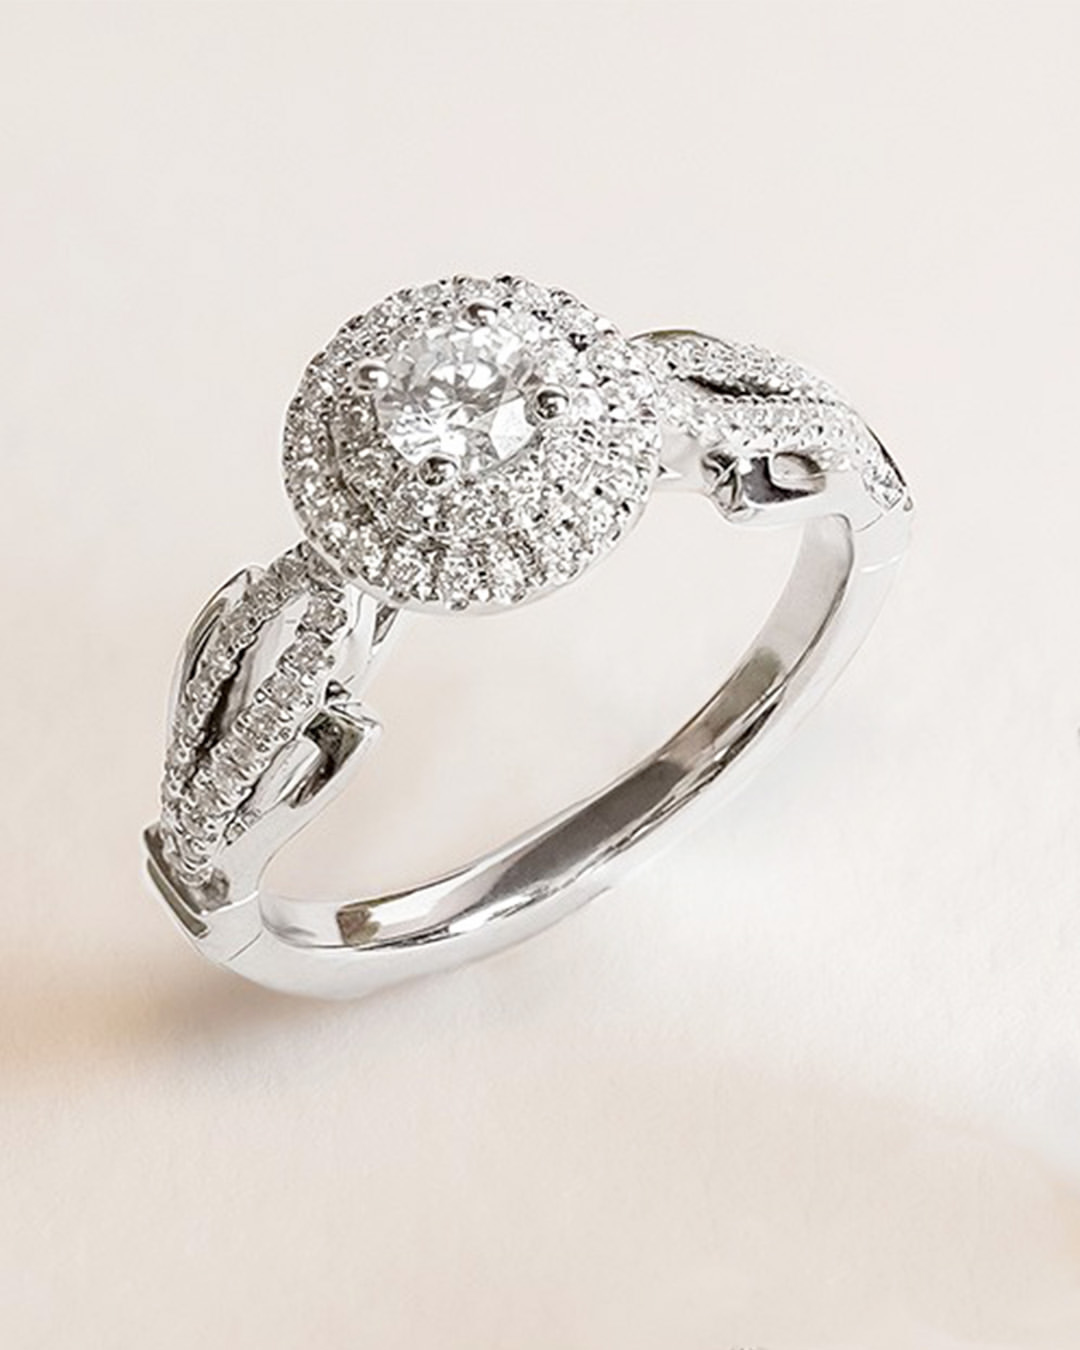 Enchanted Disney Tiana 0.58 CT. T.W. Diamond Double Frame Split Shank Engagement Ring in 14K White Gold